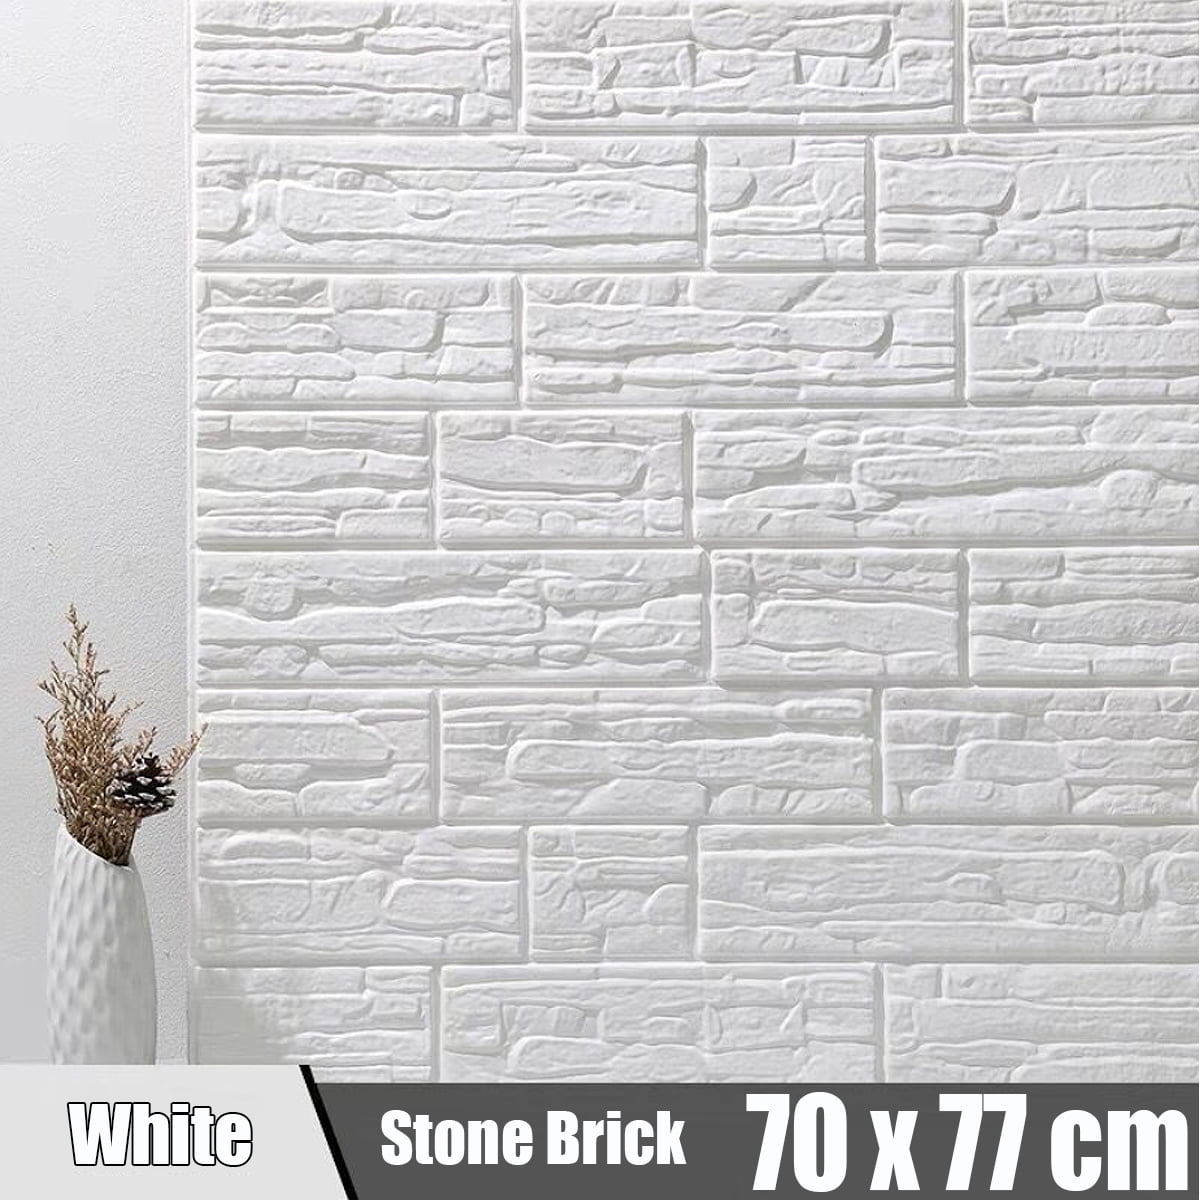 X12 3D Tile Brick Wall Self-adhesive Sheets Foam 12"X12" Textured White X12 